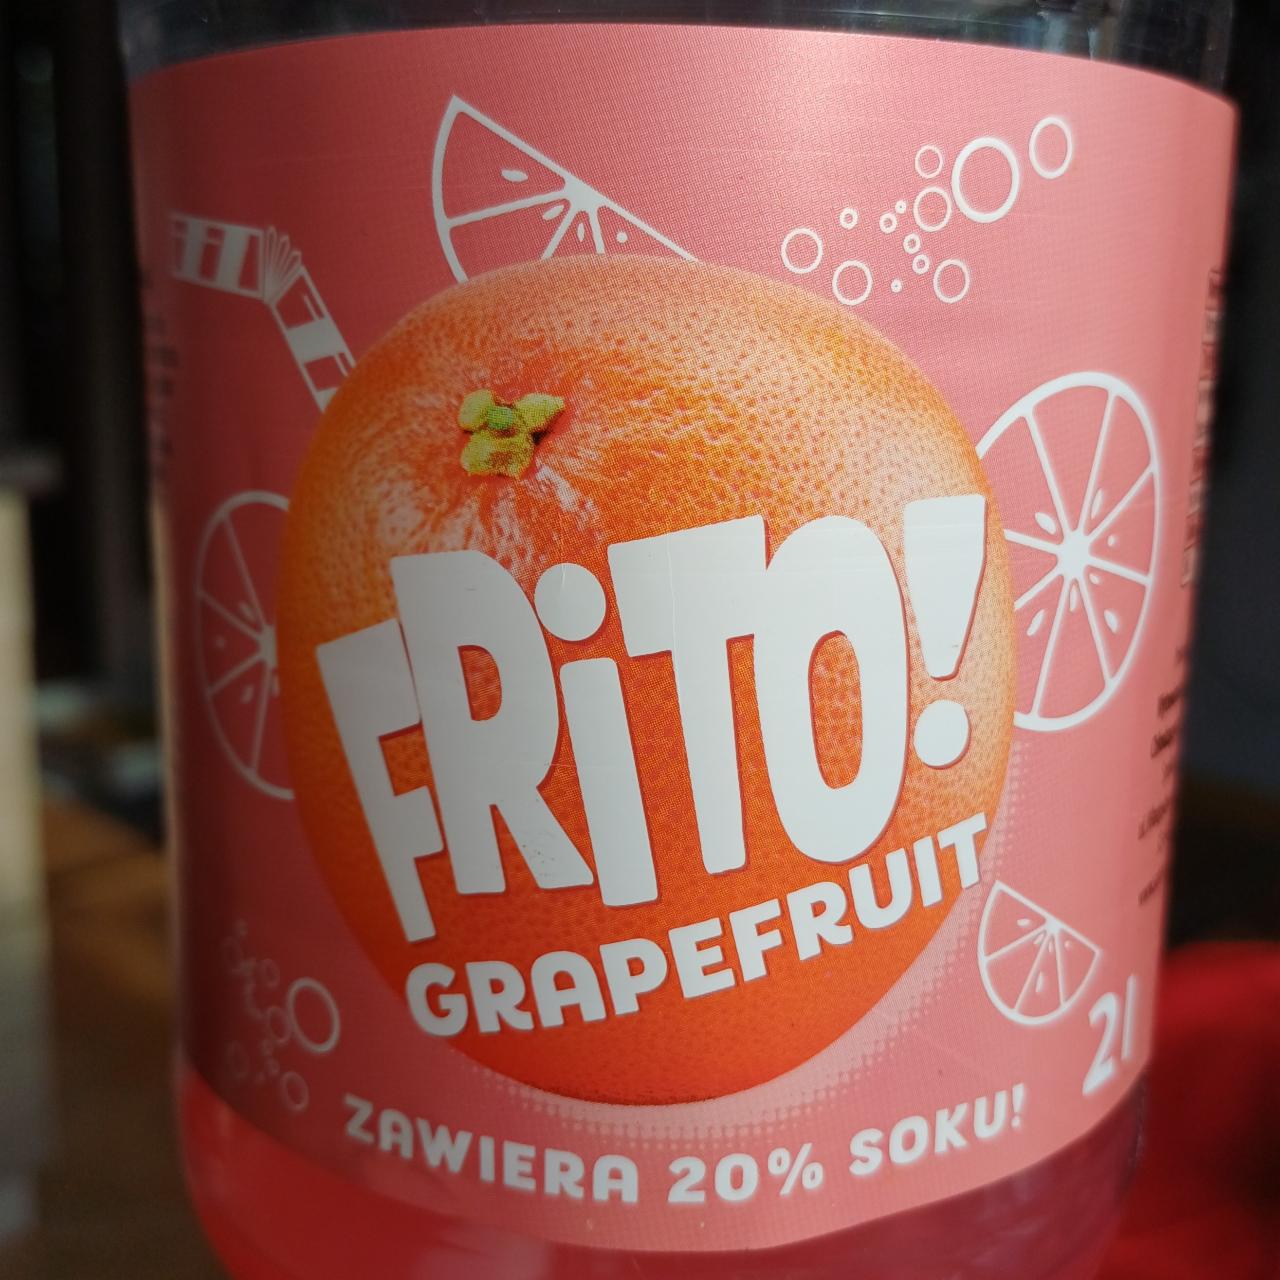 Fotografie - Grapefruit zawiera 20% soku Frito!